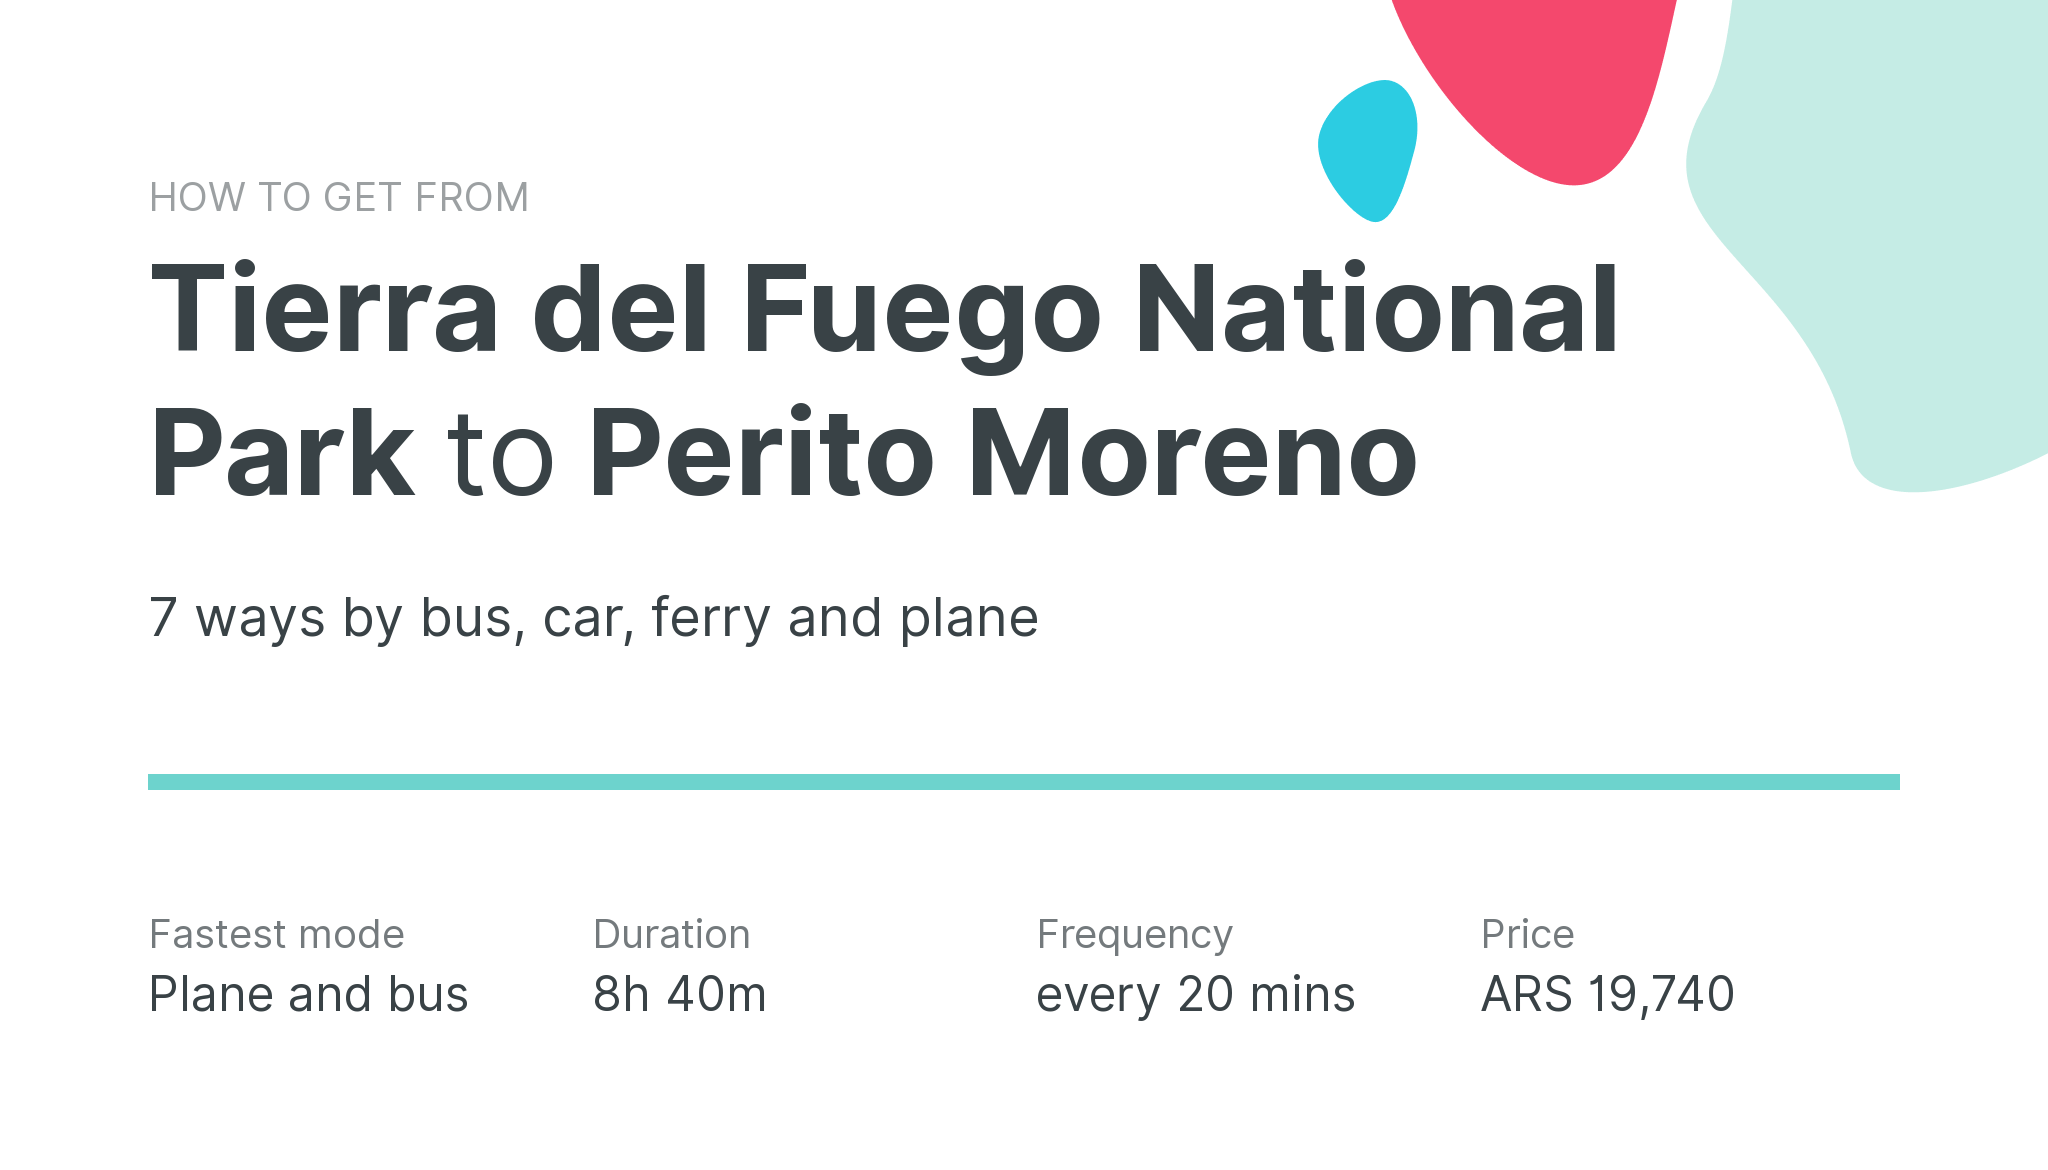 How do I get from Tierra del Fuego National Park to Perito Moreno